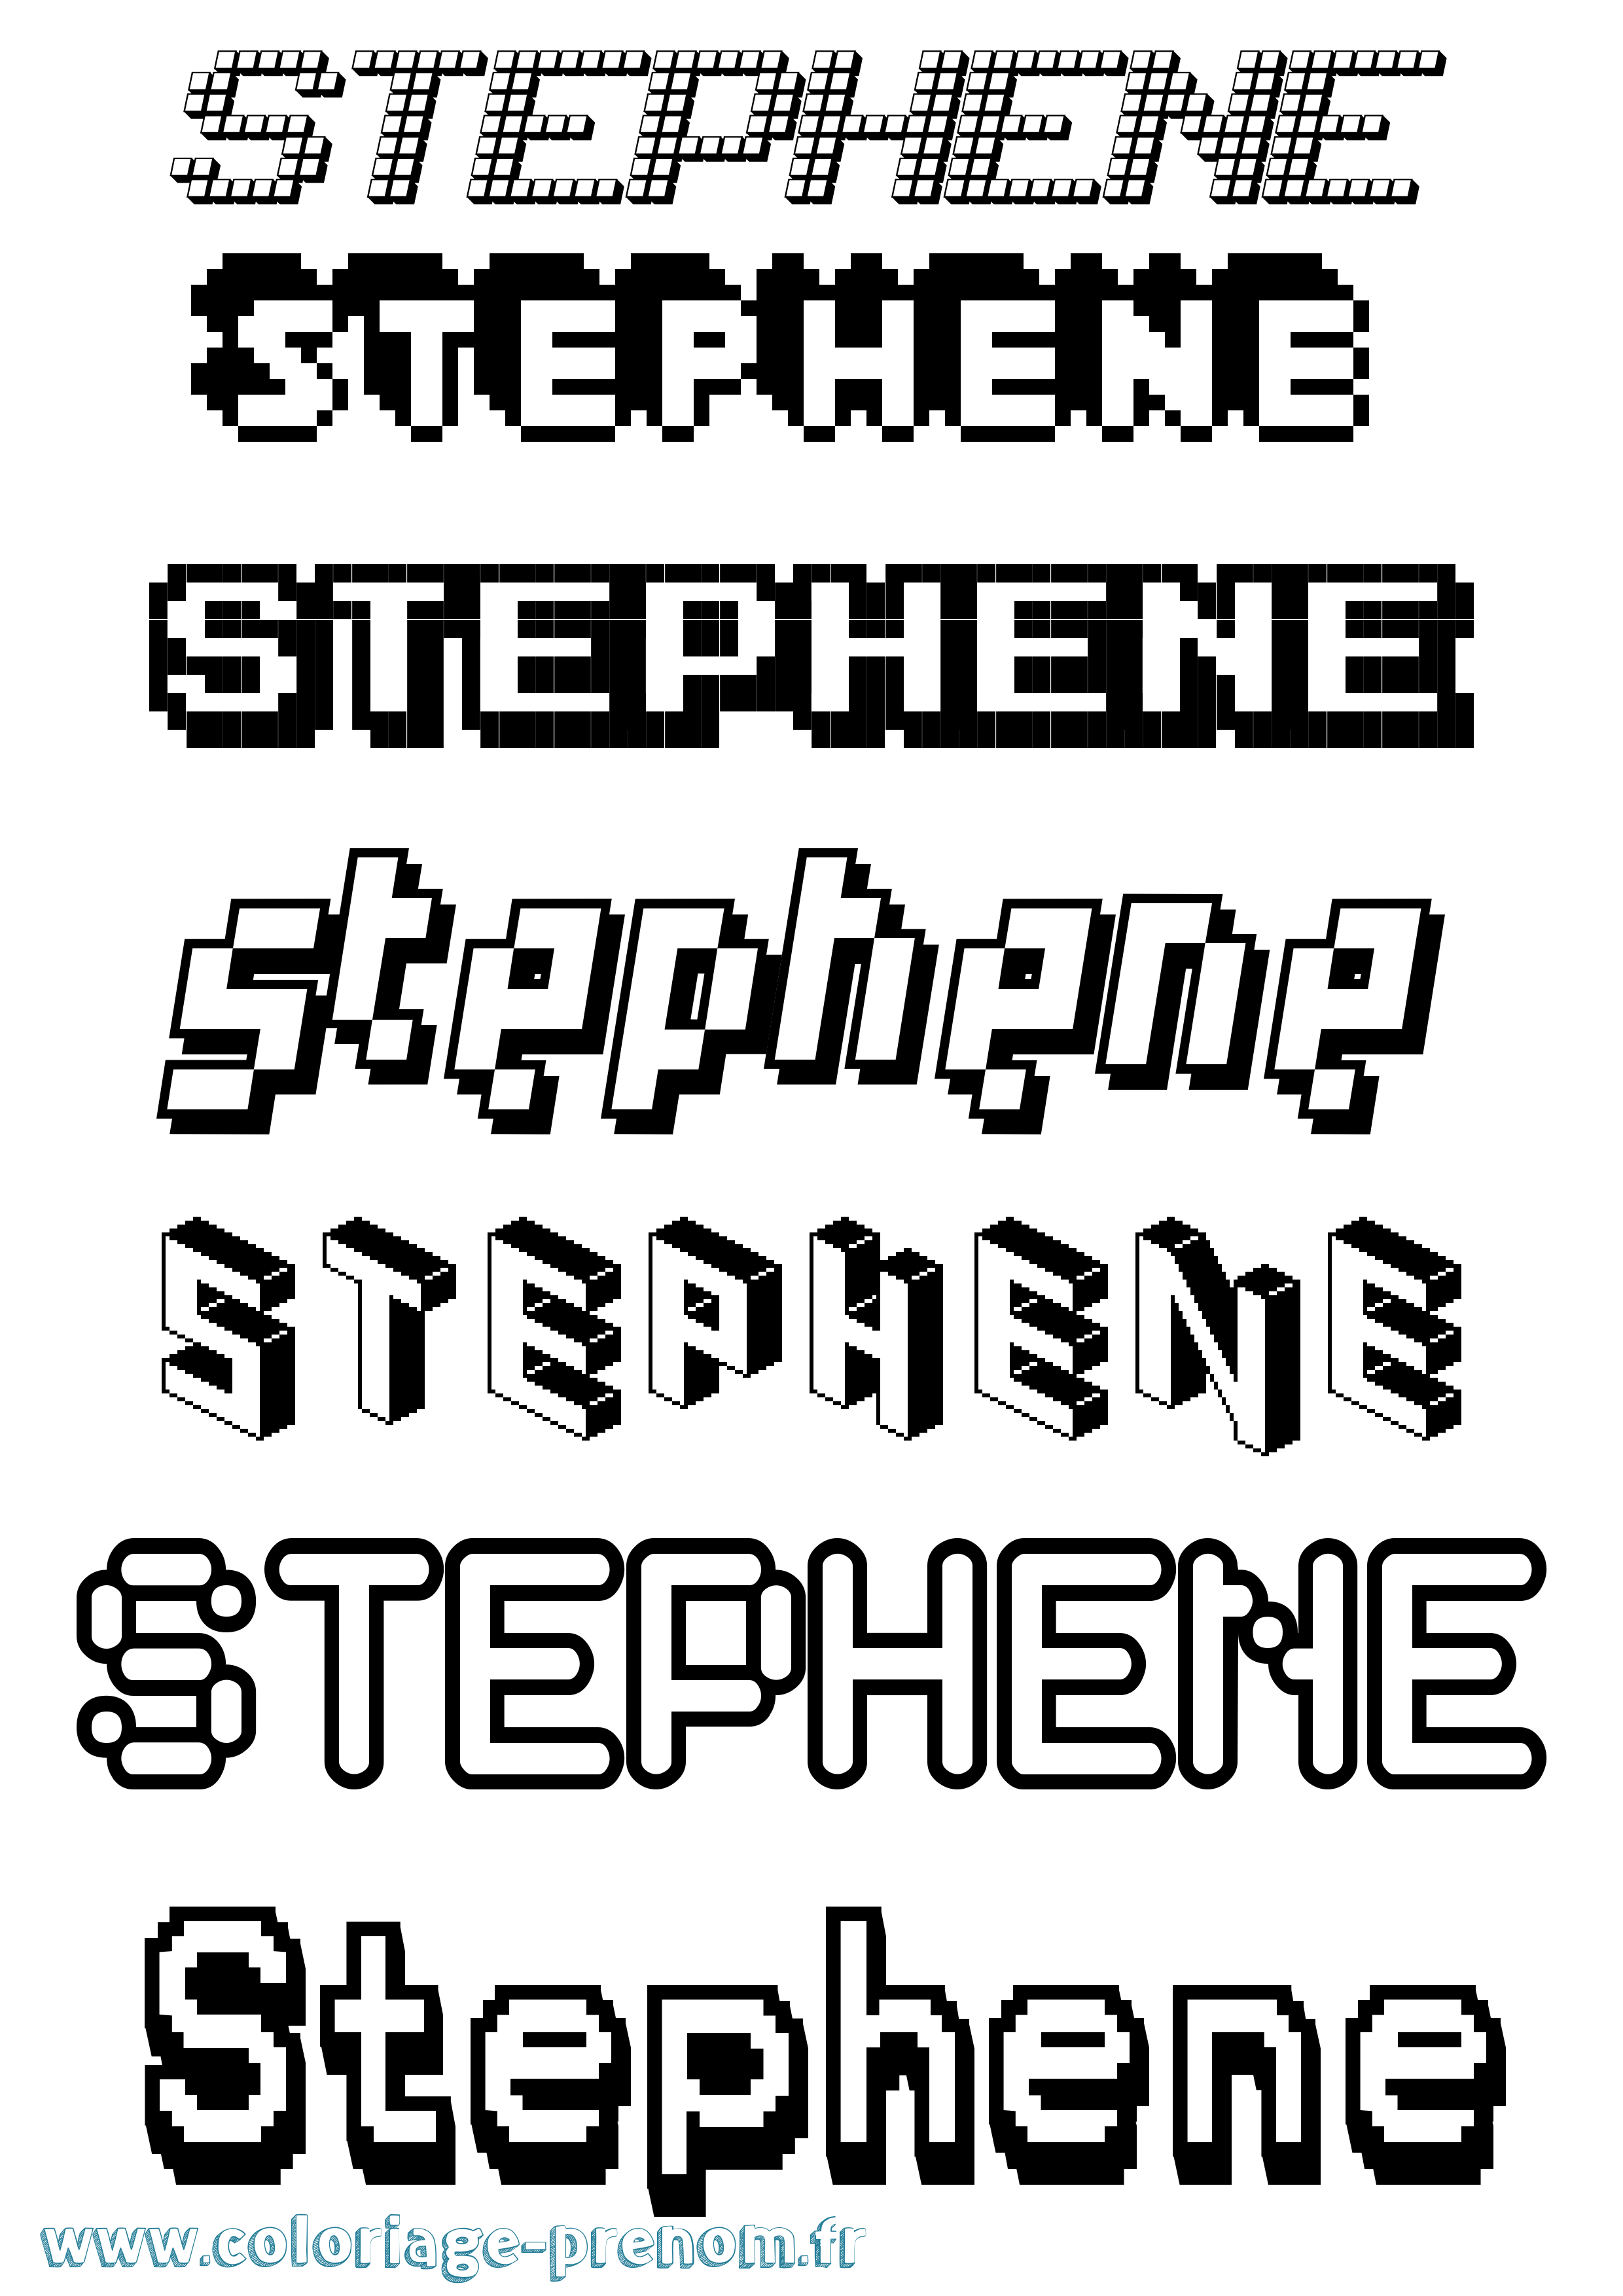 Coloriage prénom Stephene Pixel